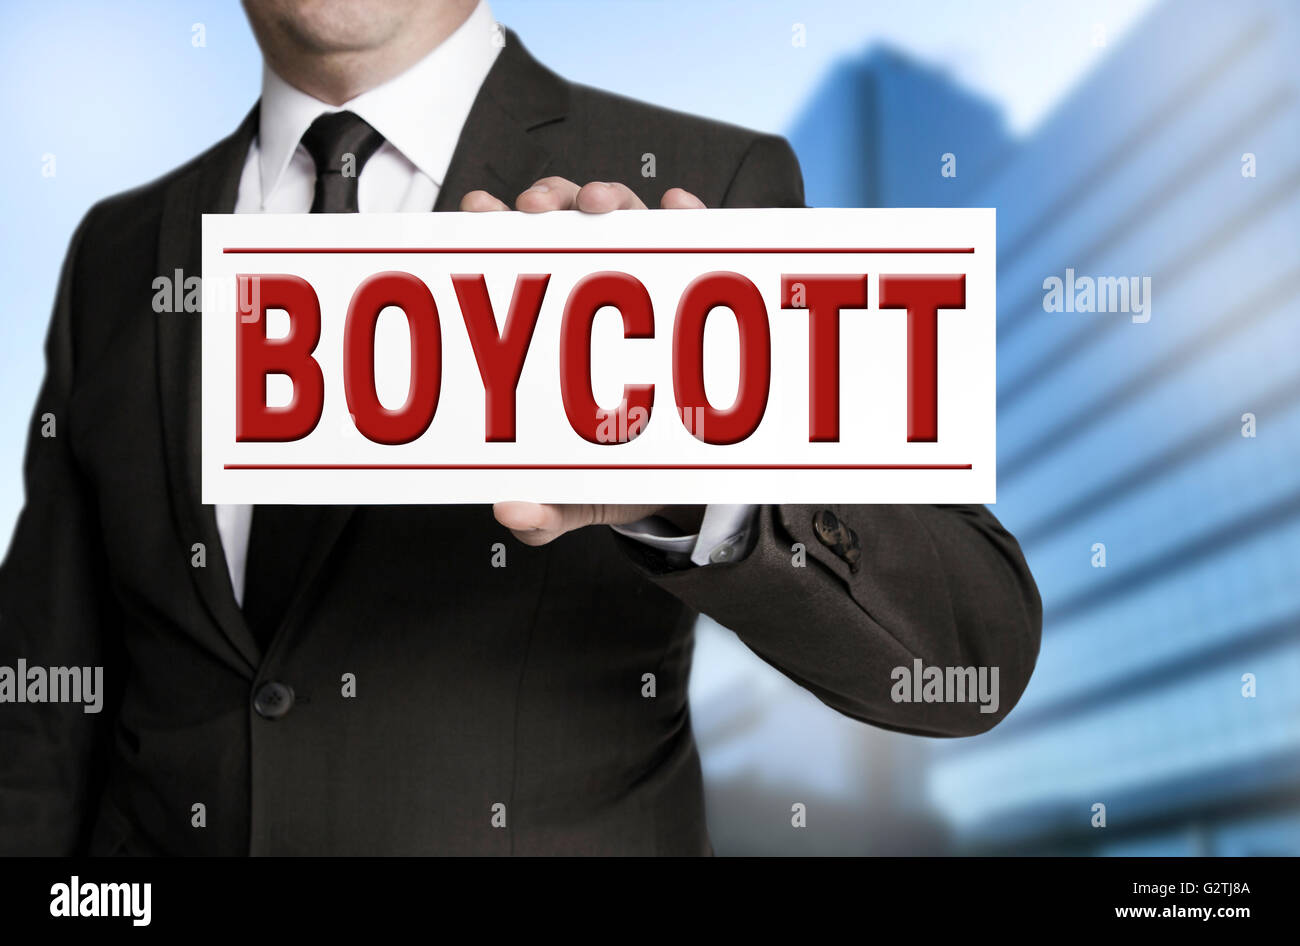 boycott shield is held by businessman. Stock Photo